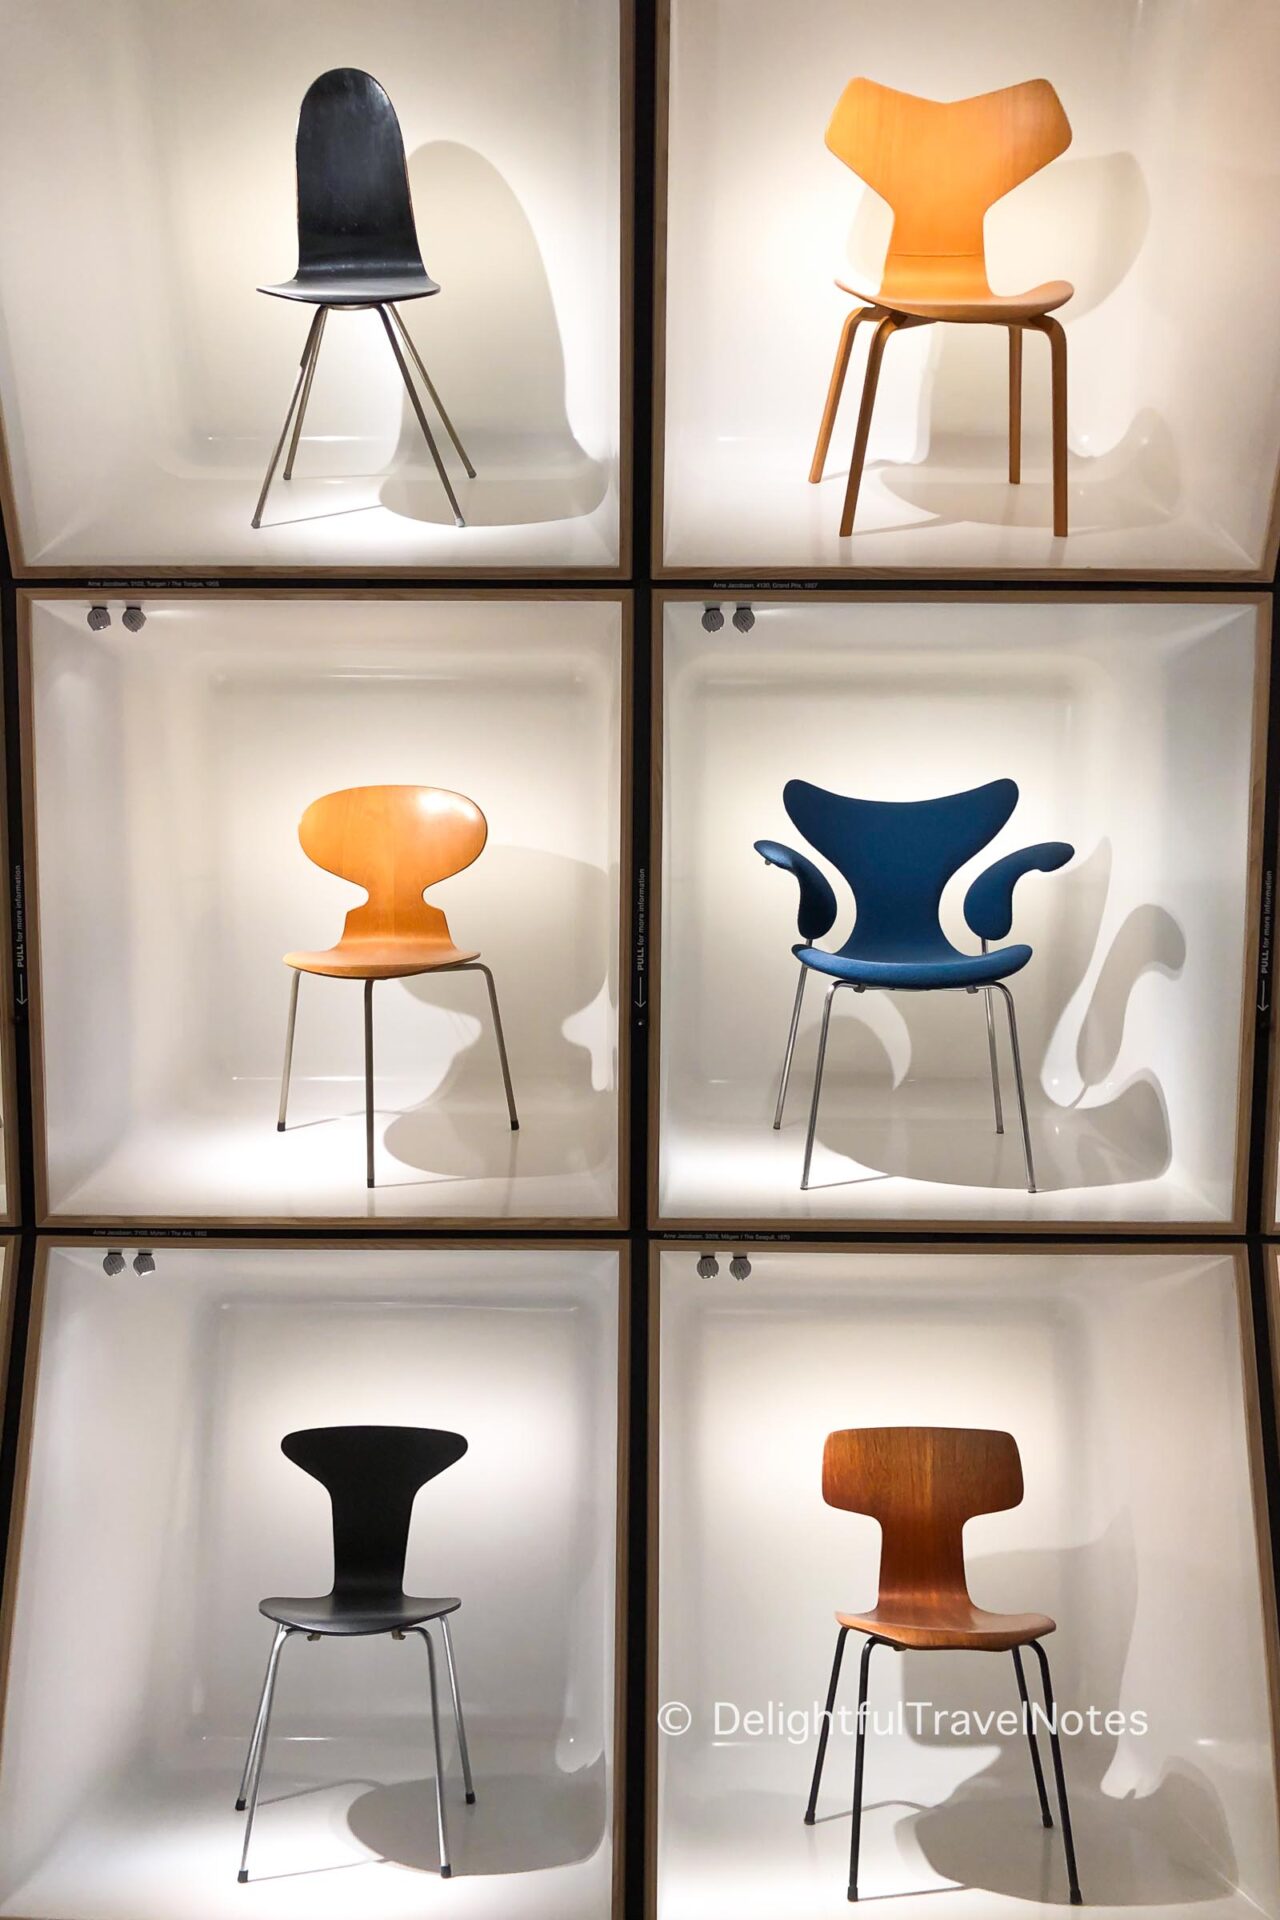 Some iconic Danish chairs at Design Museum Denmark in Copenhagen.